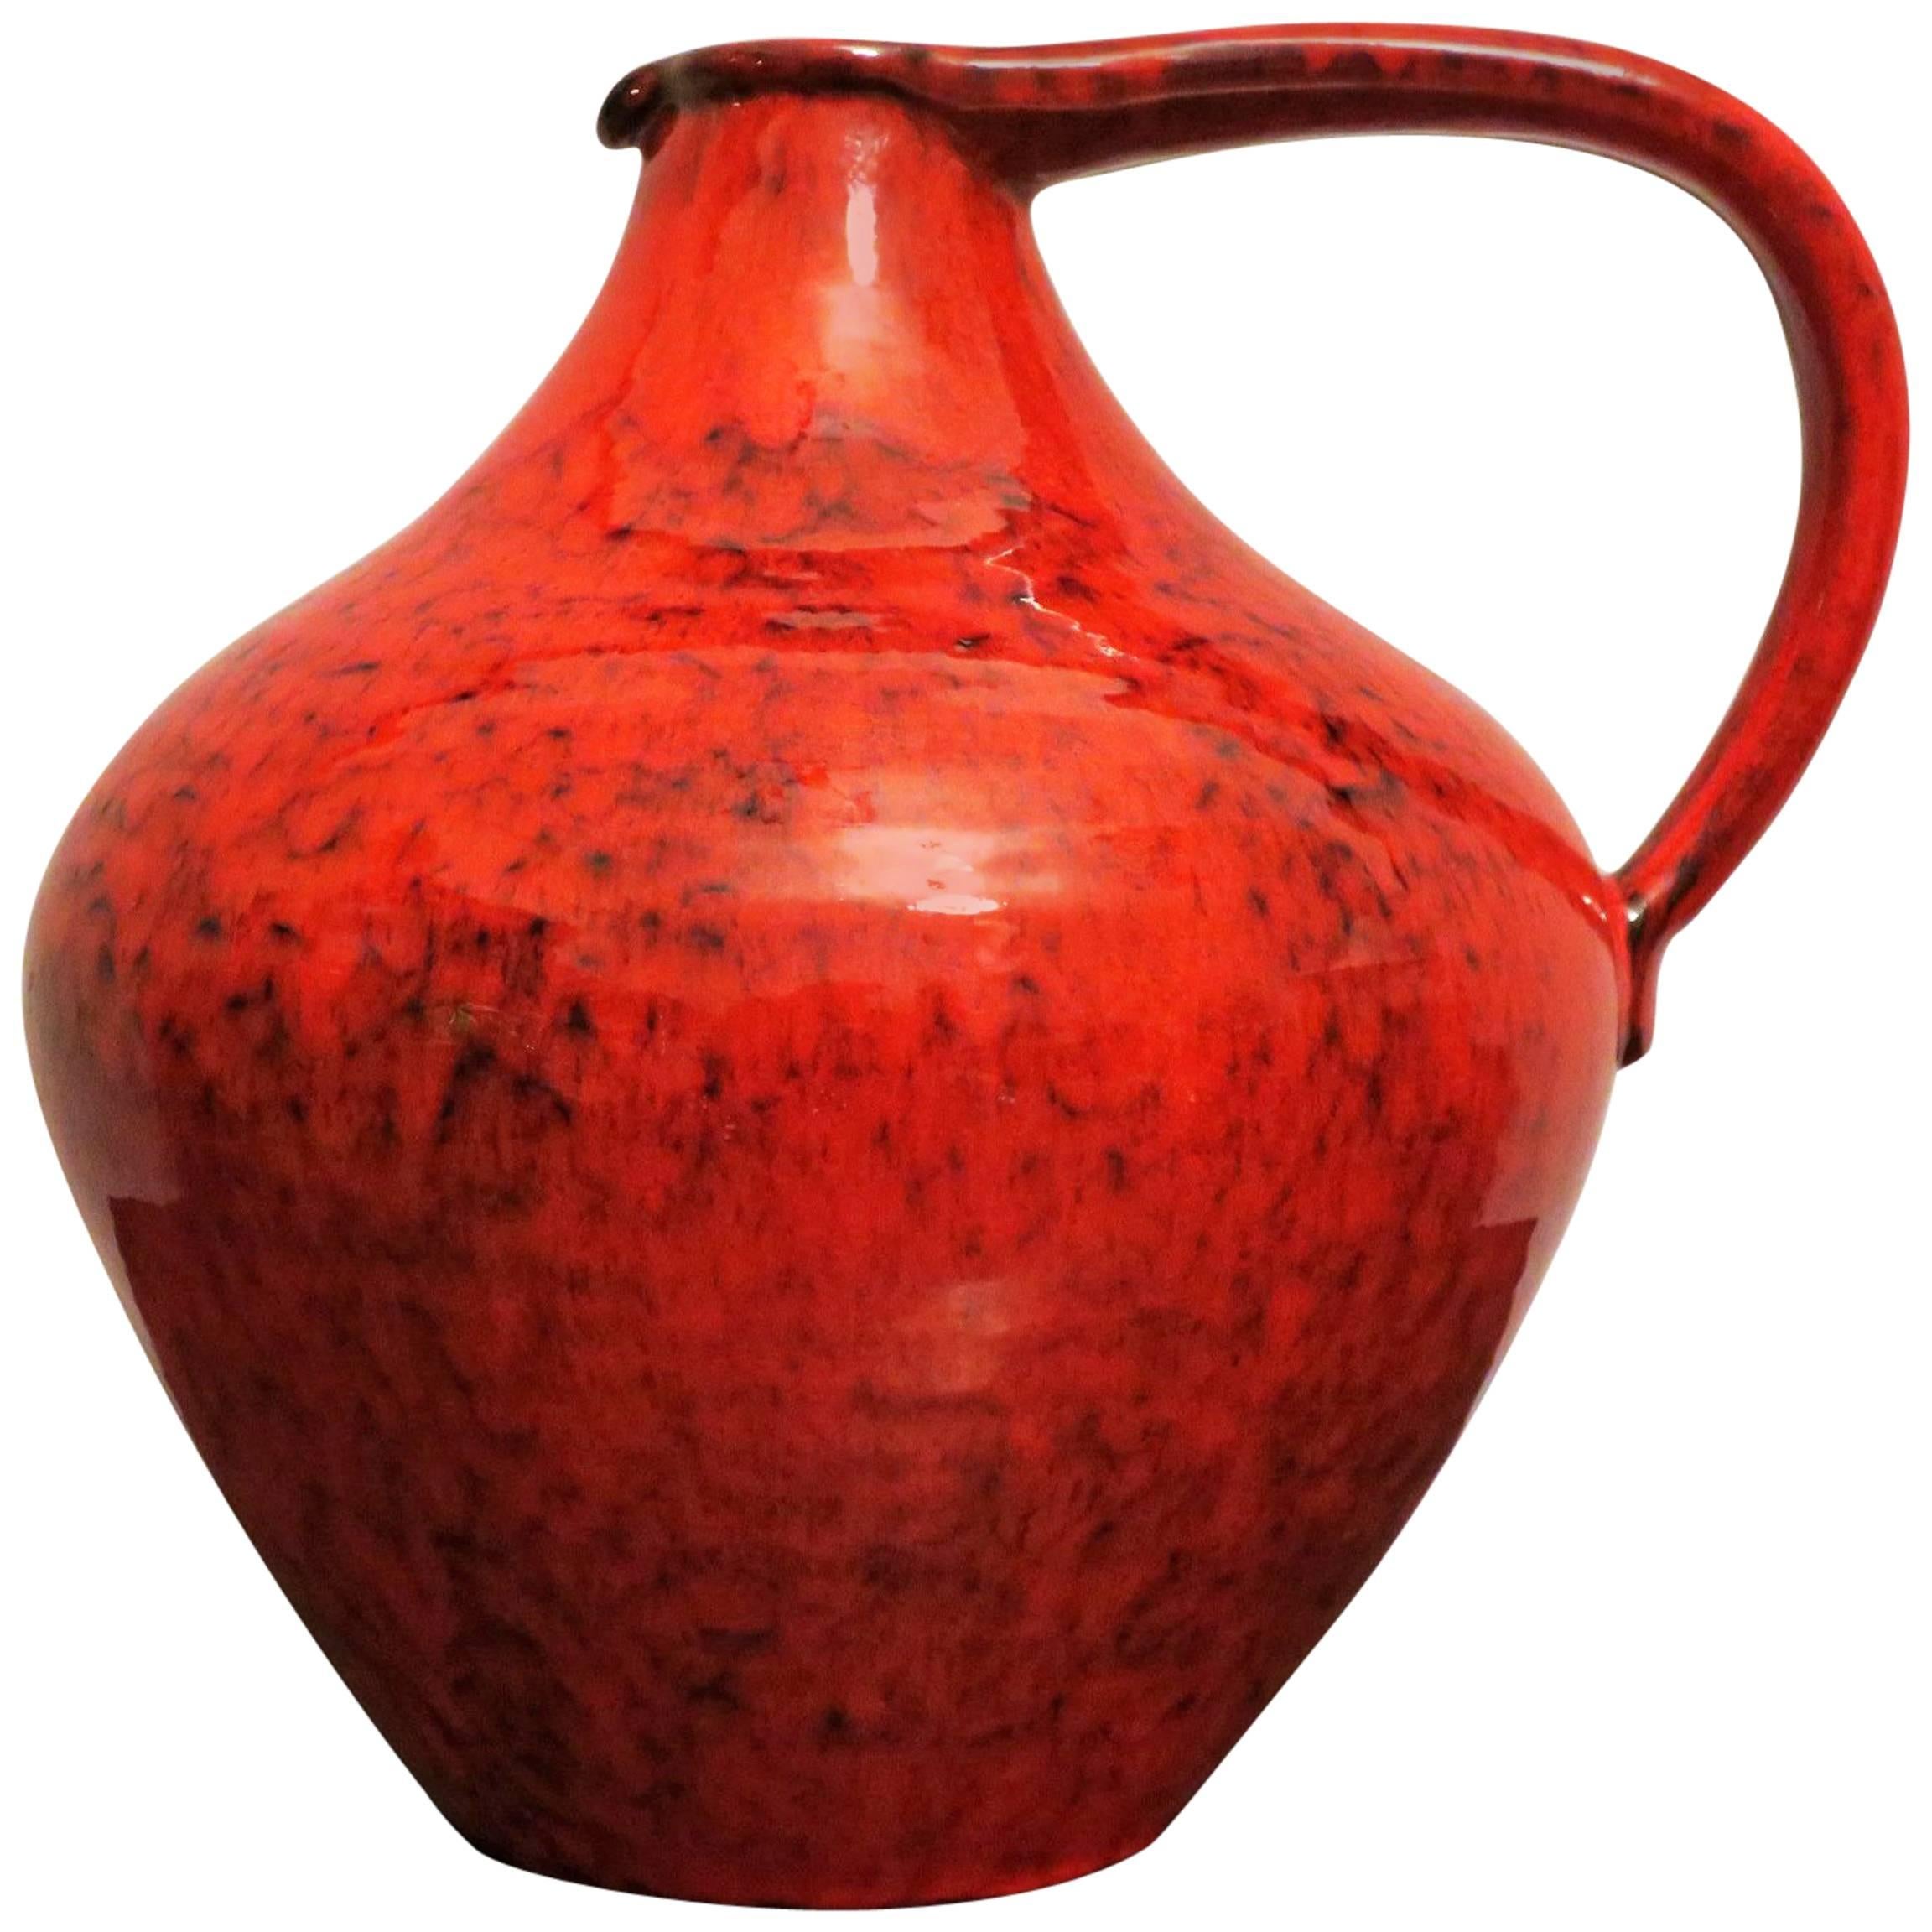 Striking West German Glazed Ceramic Vase or Pitcher, 1950s